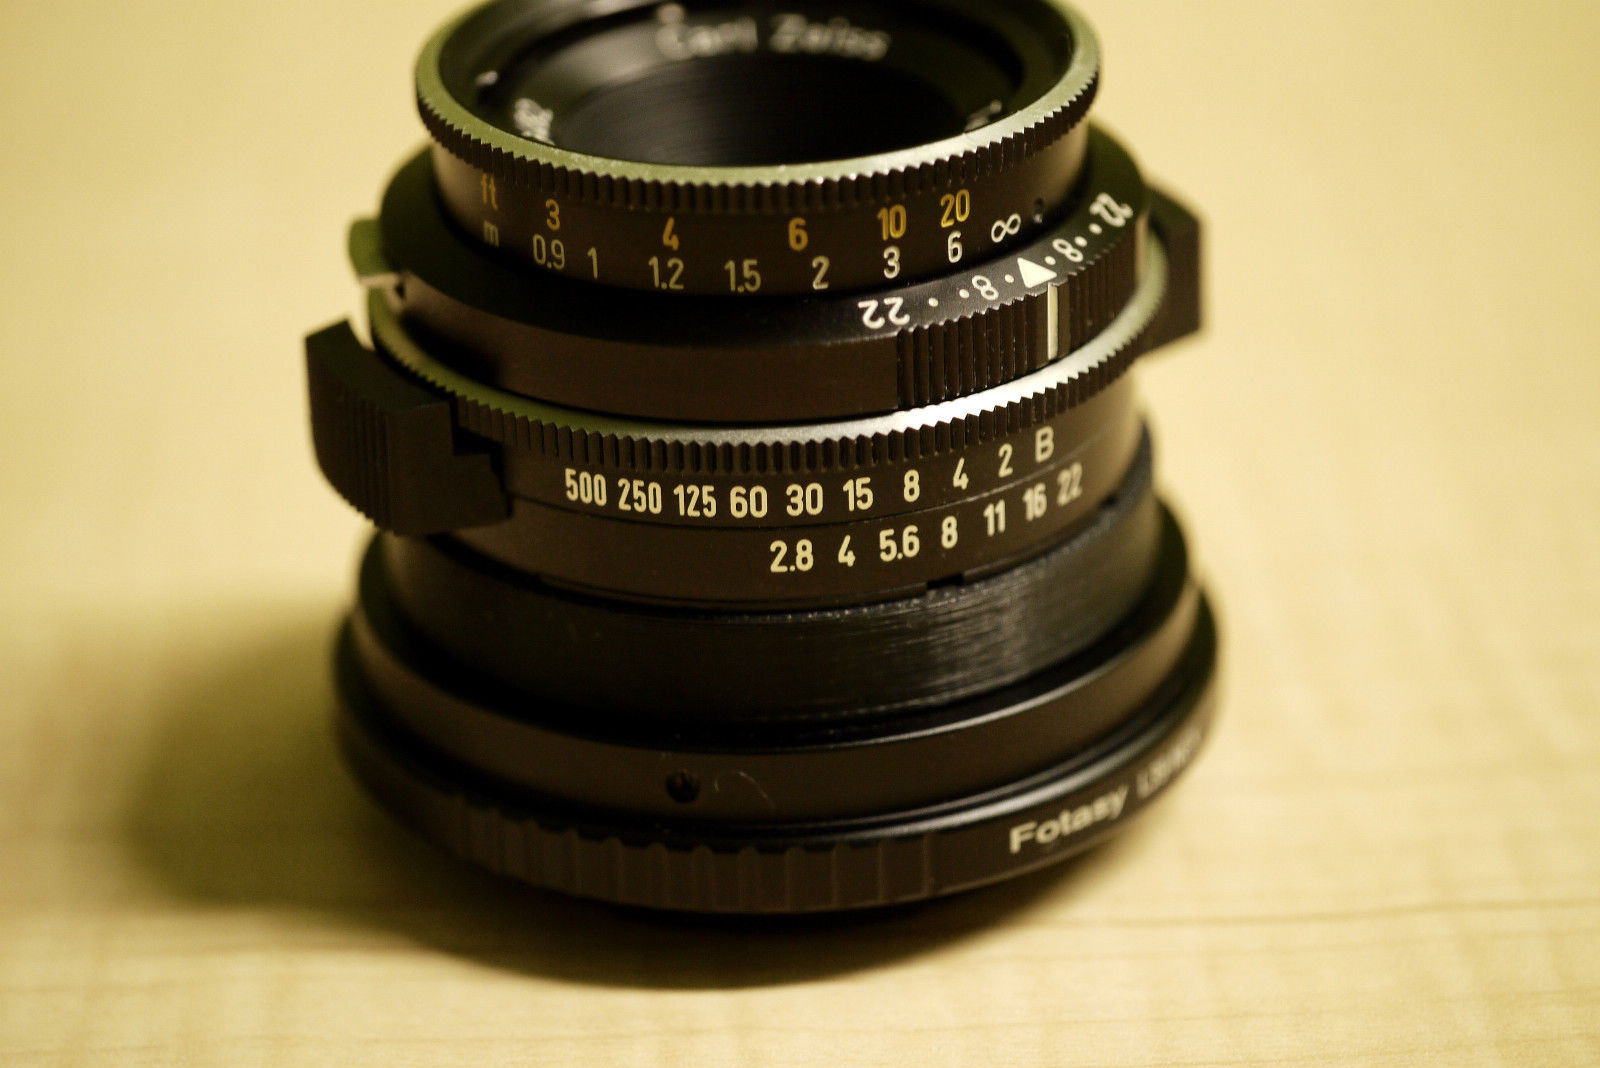 Rolleiflex SL26 lens to Sony Mirrorless adapter